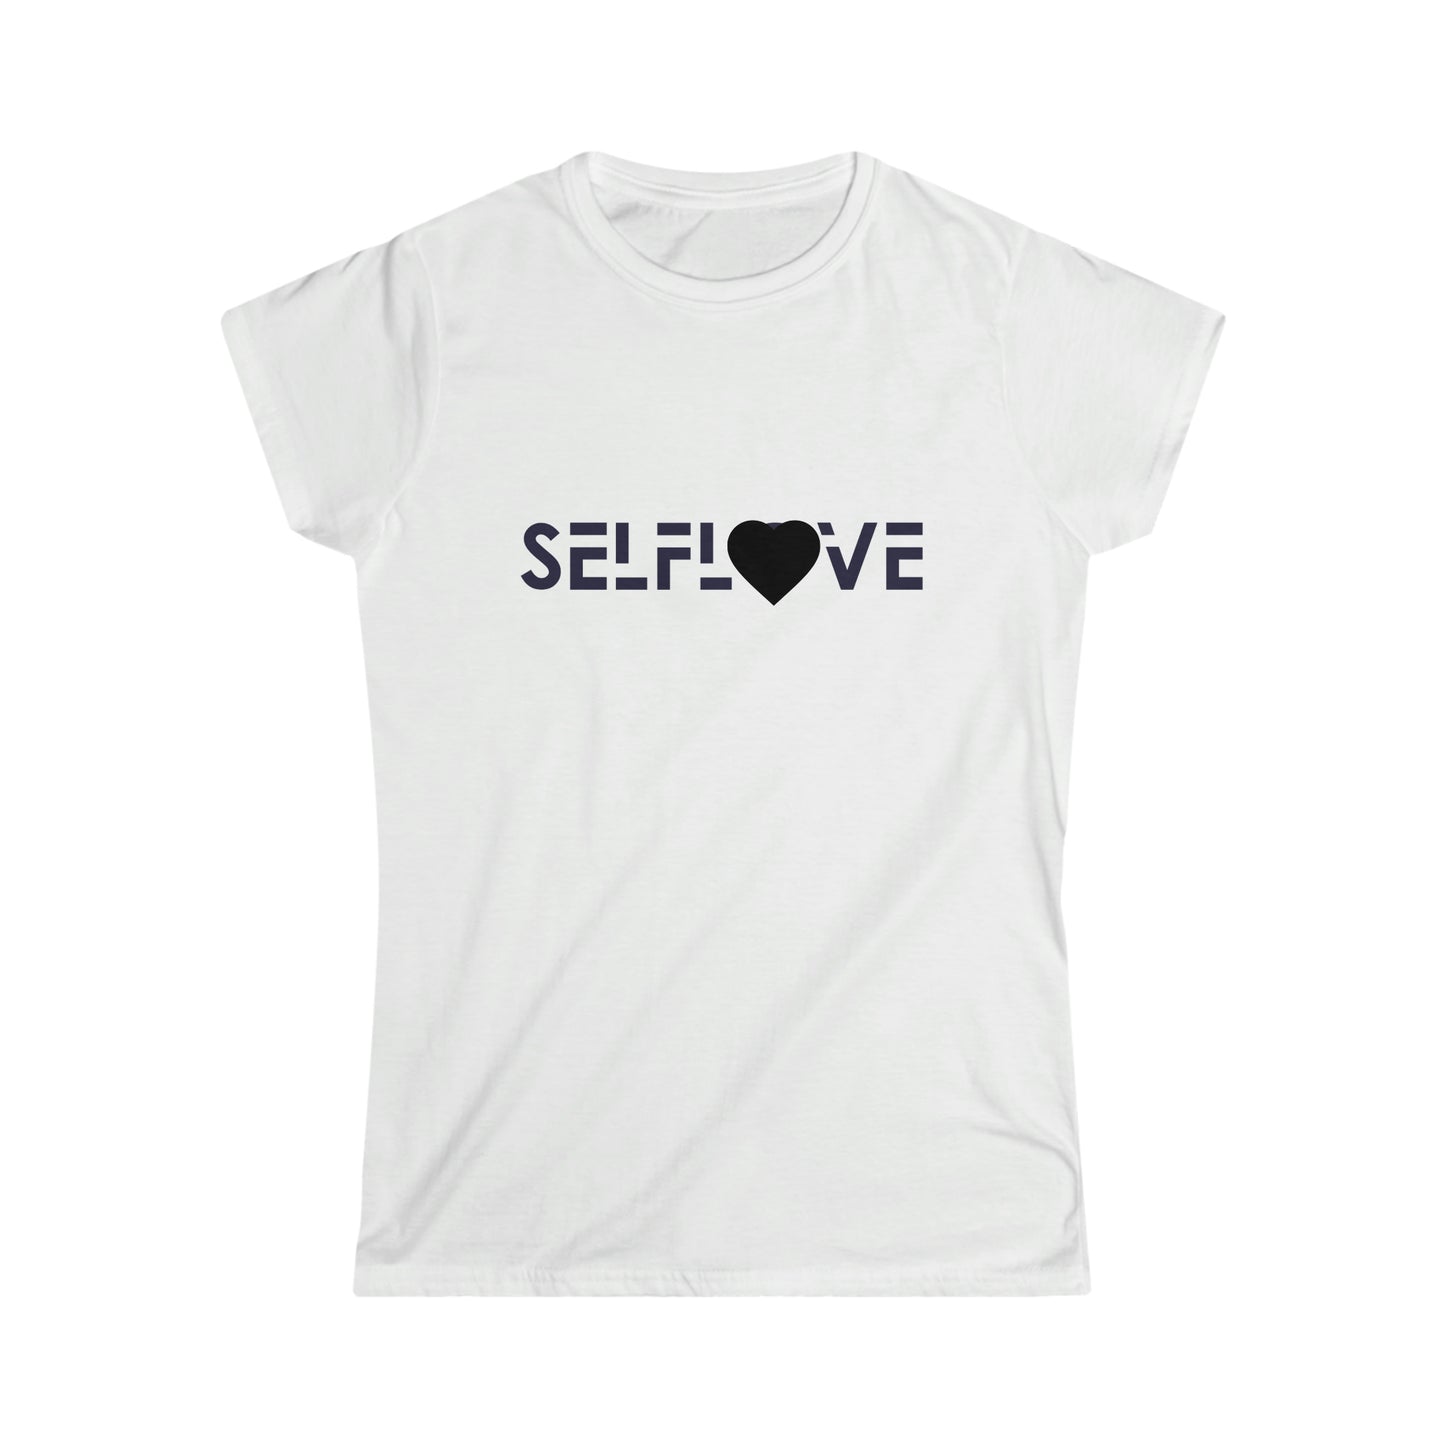 Women's SELF-LOVE Softstyle Tee